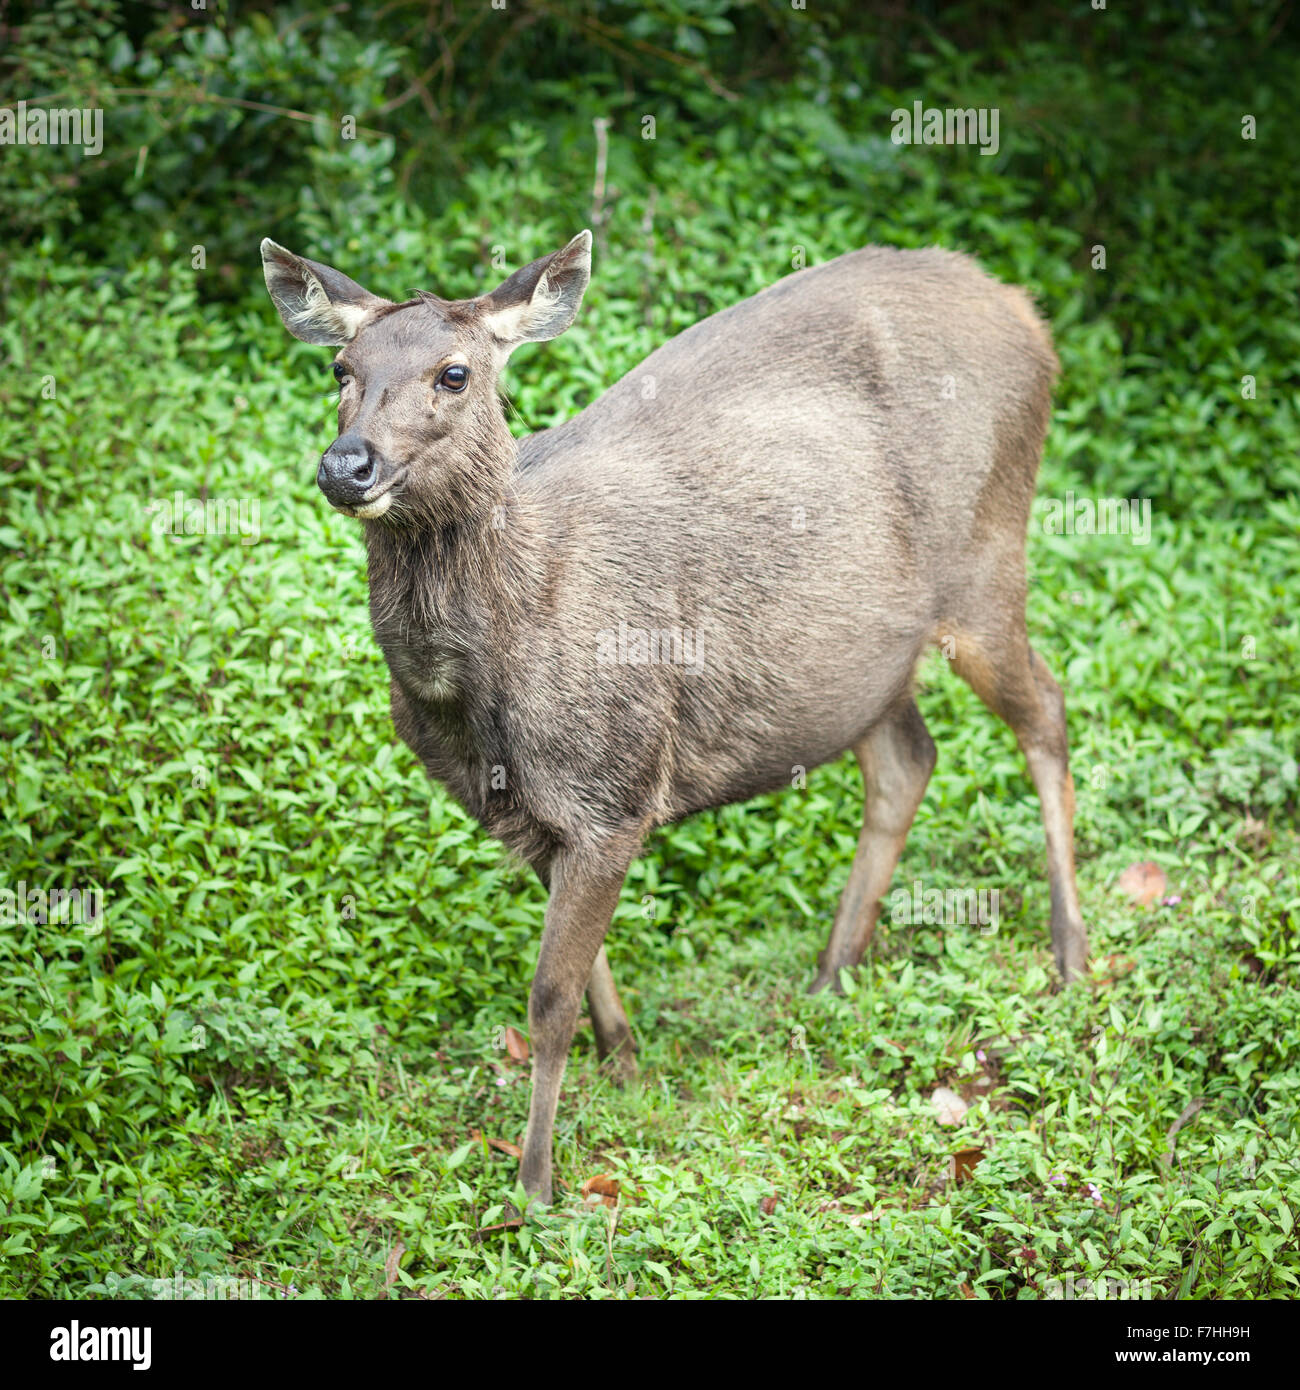 Female of the Sri Lankan sambar deer Stock Photo